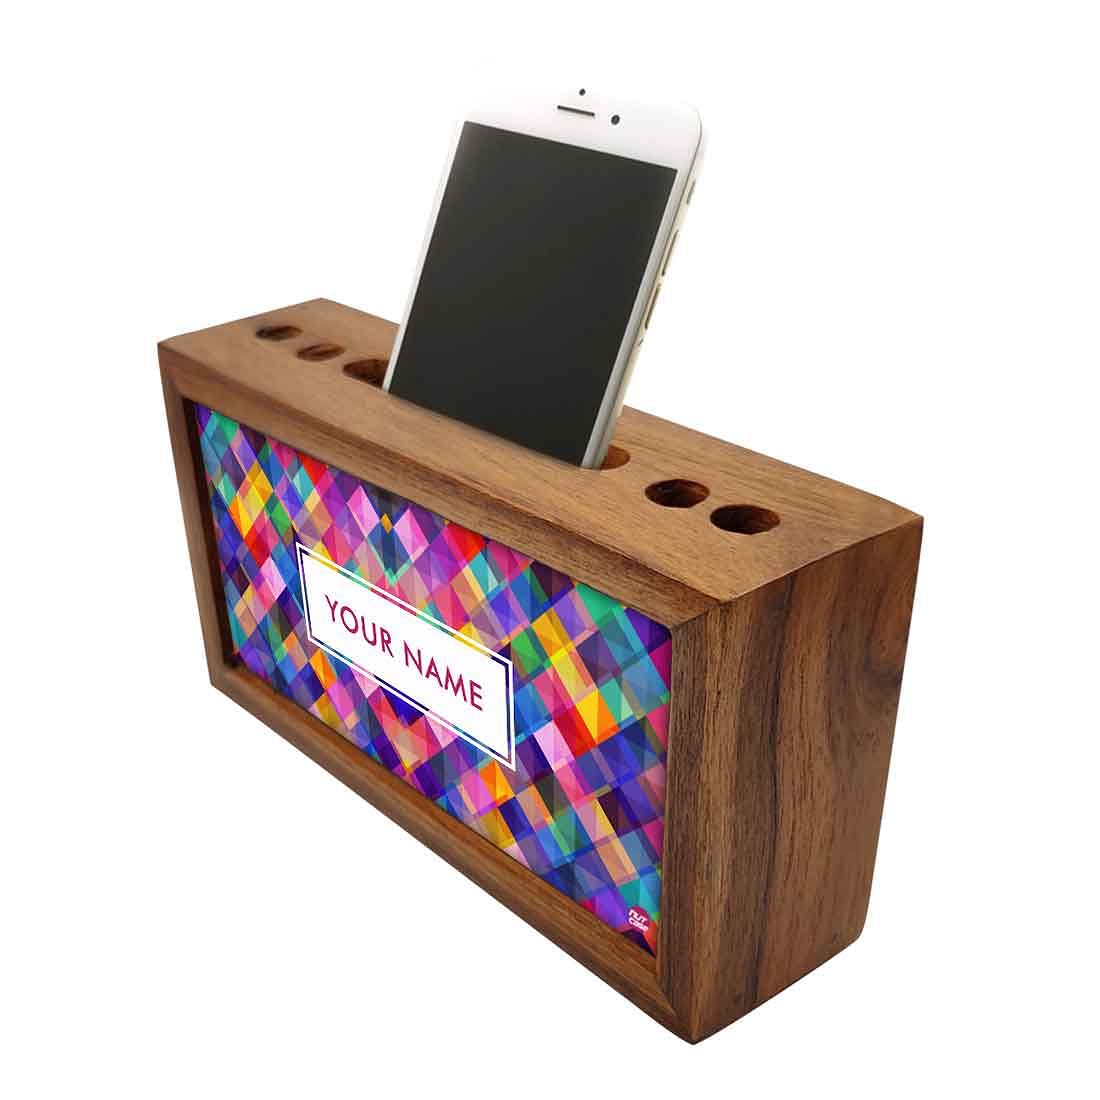 Customized Small Wooden desk organizer - Colorful Checkbox Nutcase